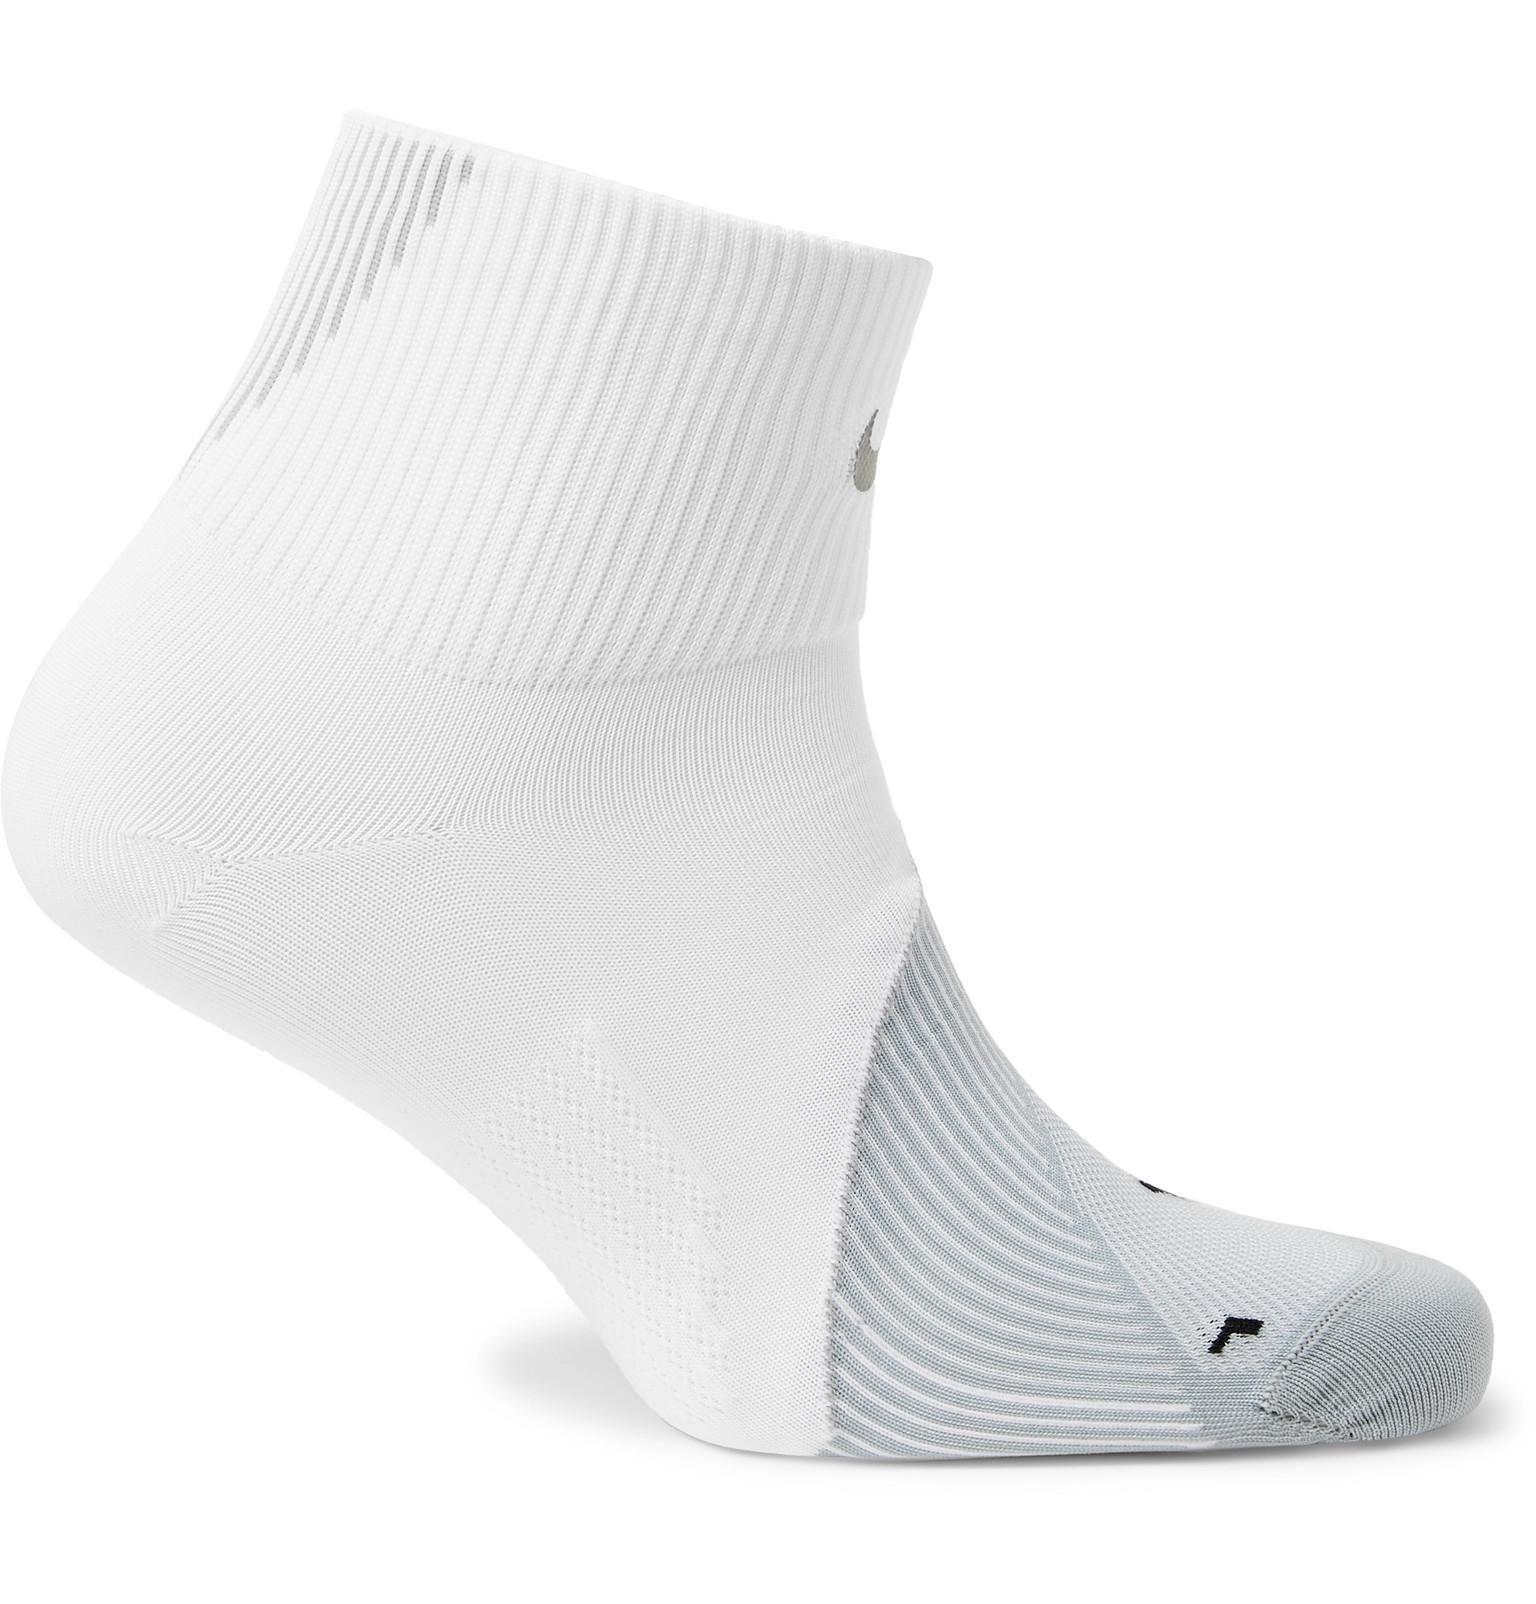 Nike Spark Cushioned Dri-fit Socks in White for Men - Lyst